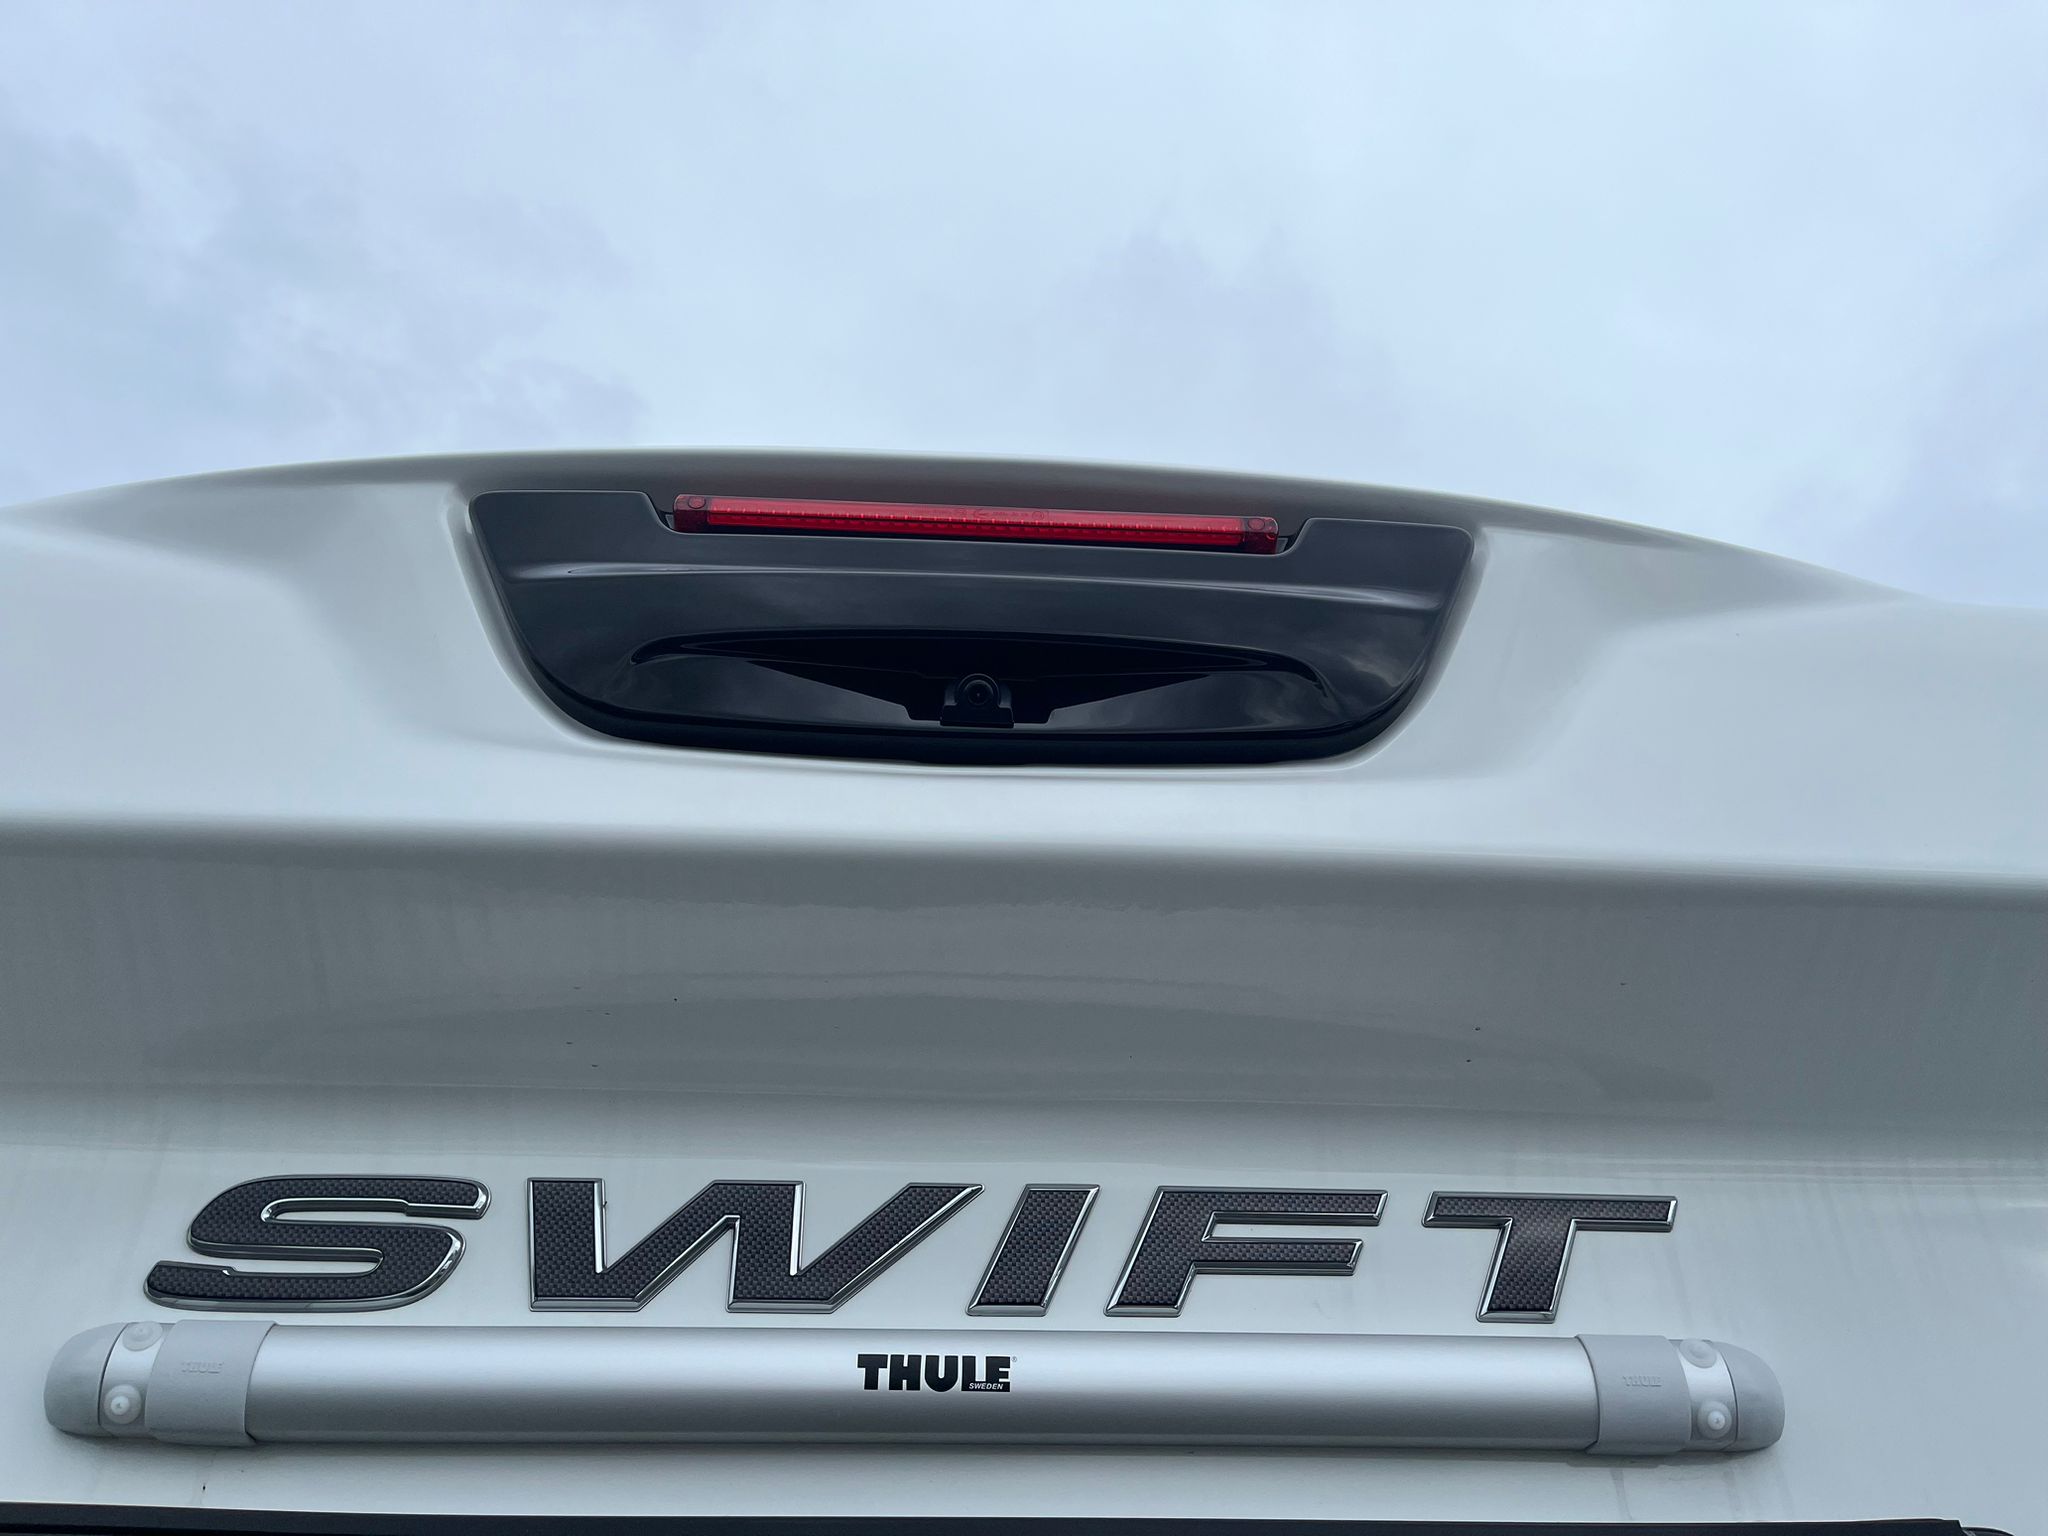 NEW Swift Ascari 344 - Auto